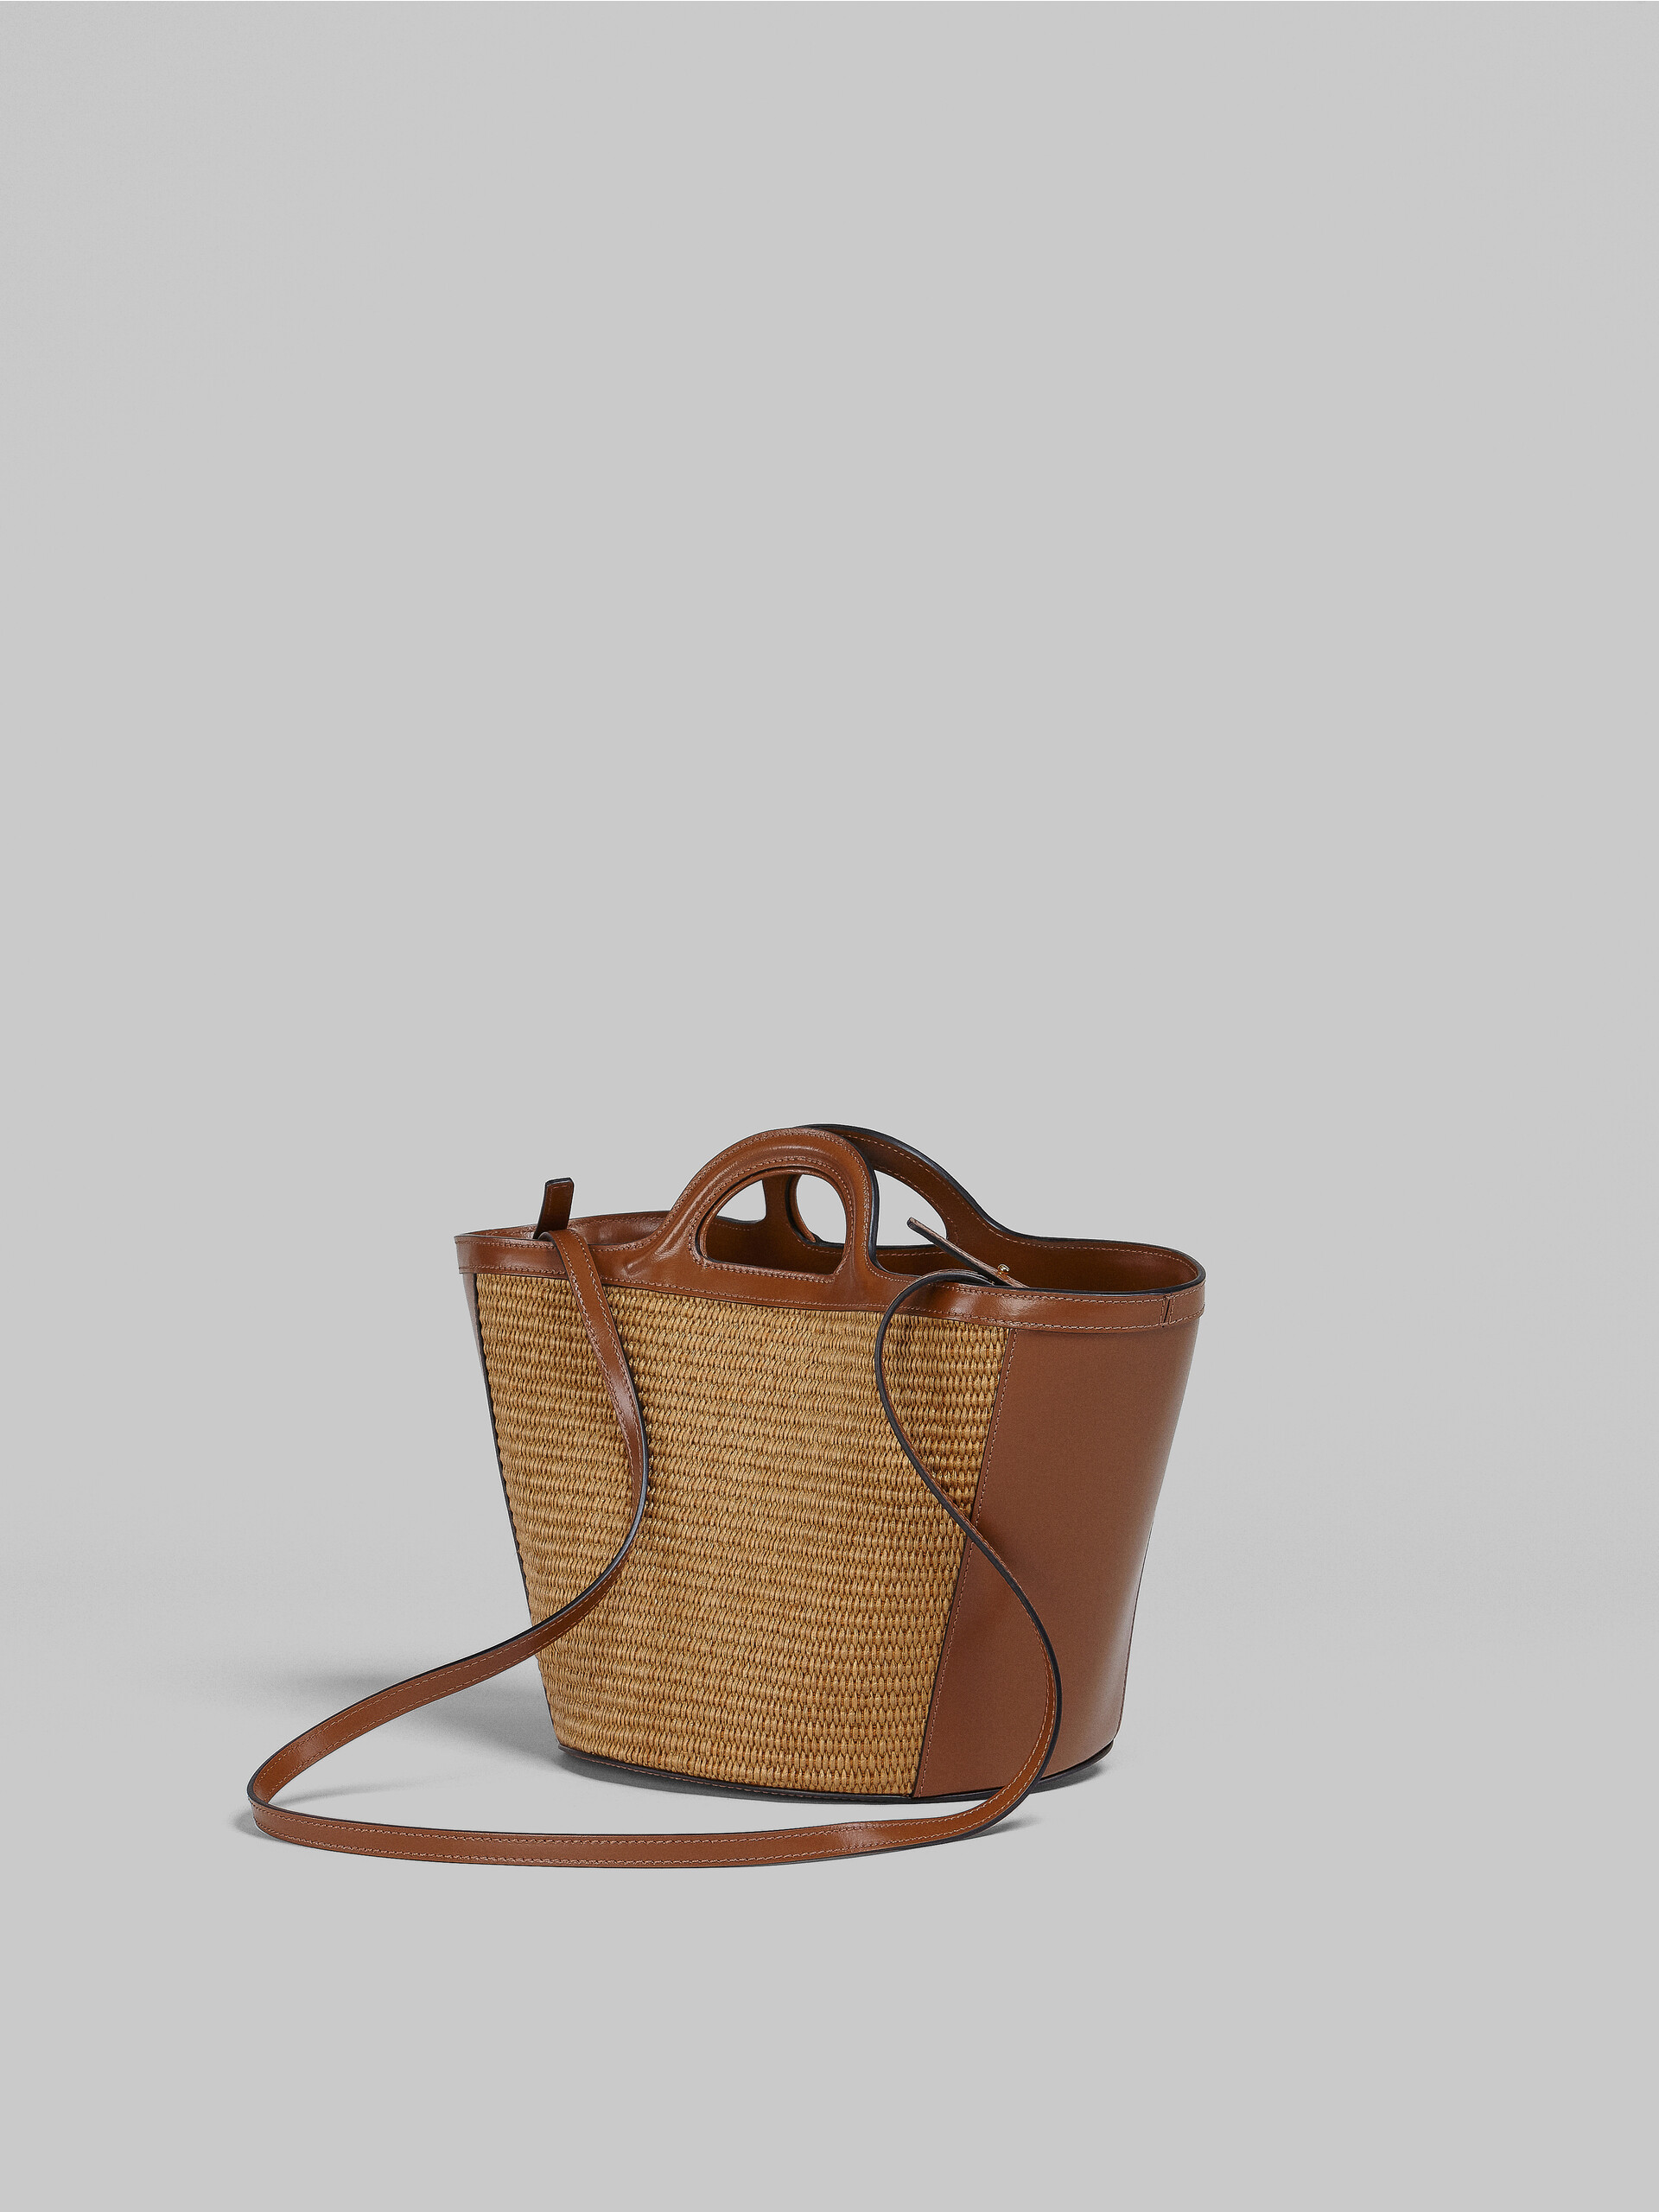 Tropicalia Small Bag in brown leather and raffia-effect fabric | Marni